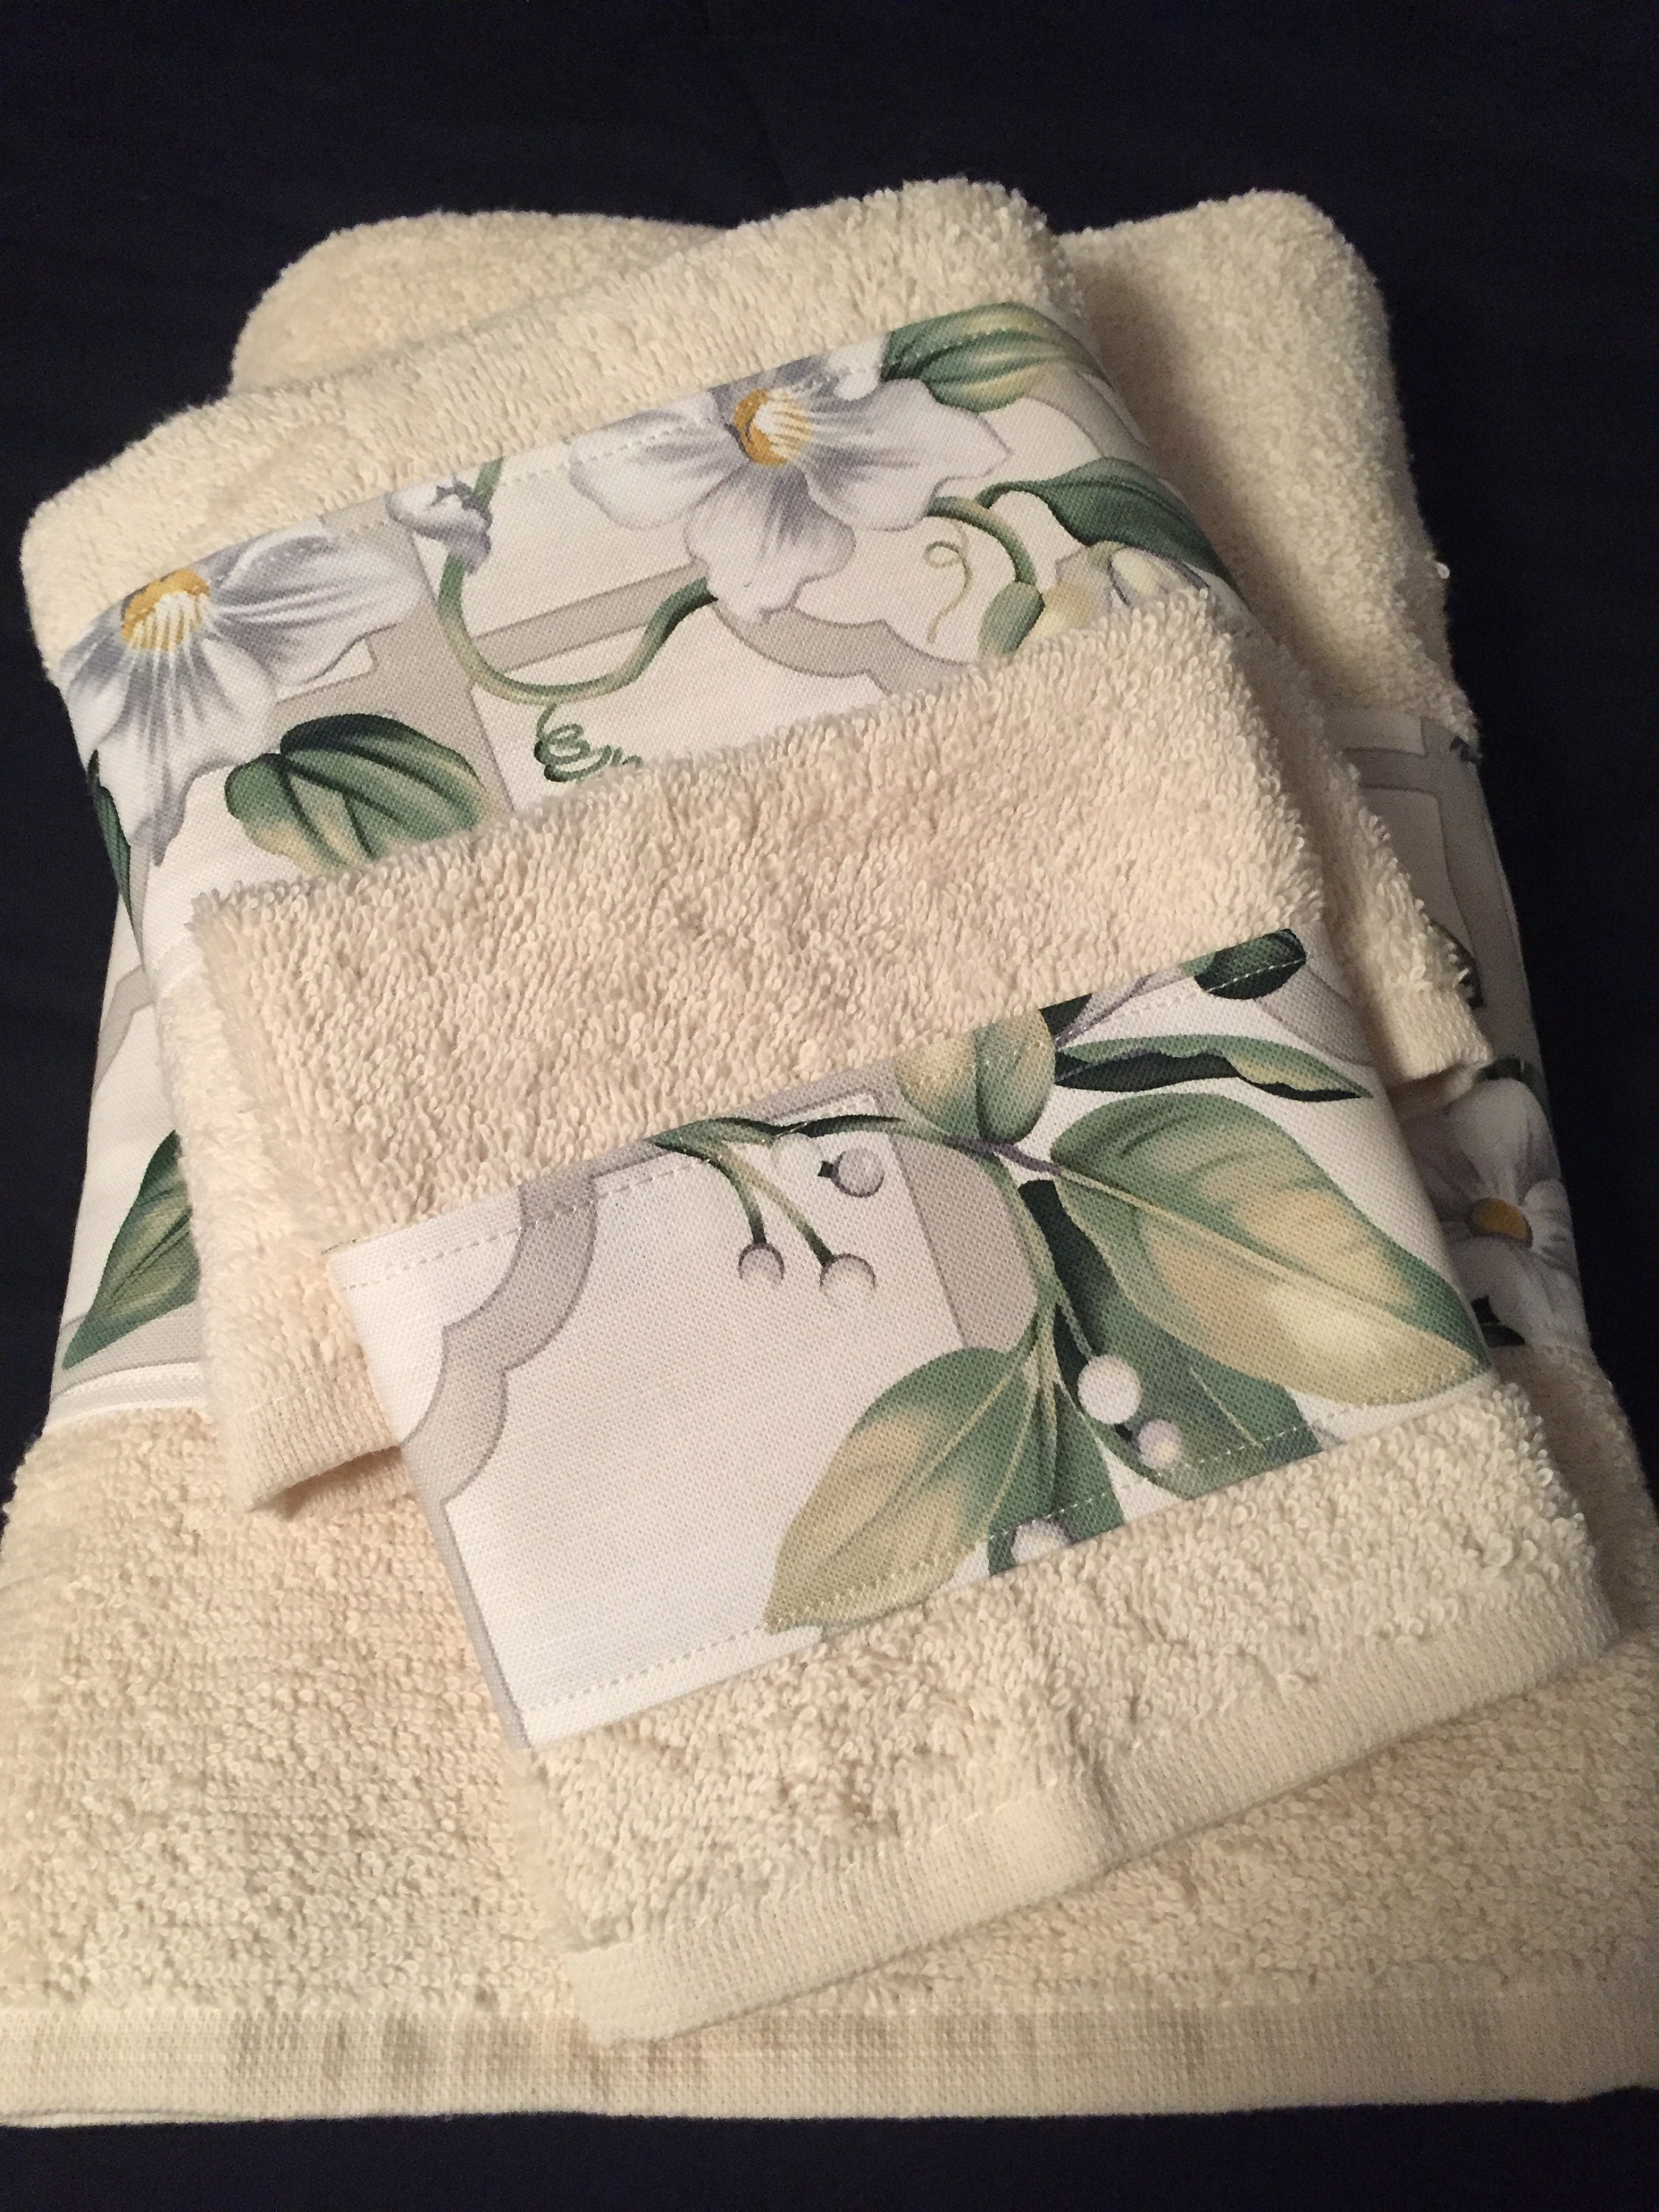 5 Vintage Teal Green Terry Cloth Bath Towel Set, Retro Jcpenney's Bath  Towels, 100% Cotton Hand Towel & Wash Cloth, 80s Bathroom Decor 